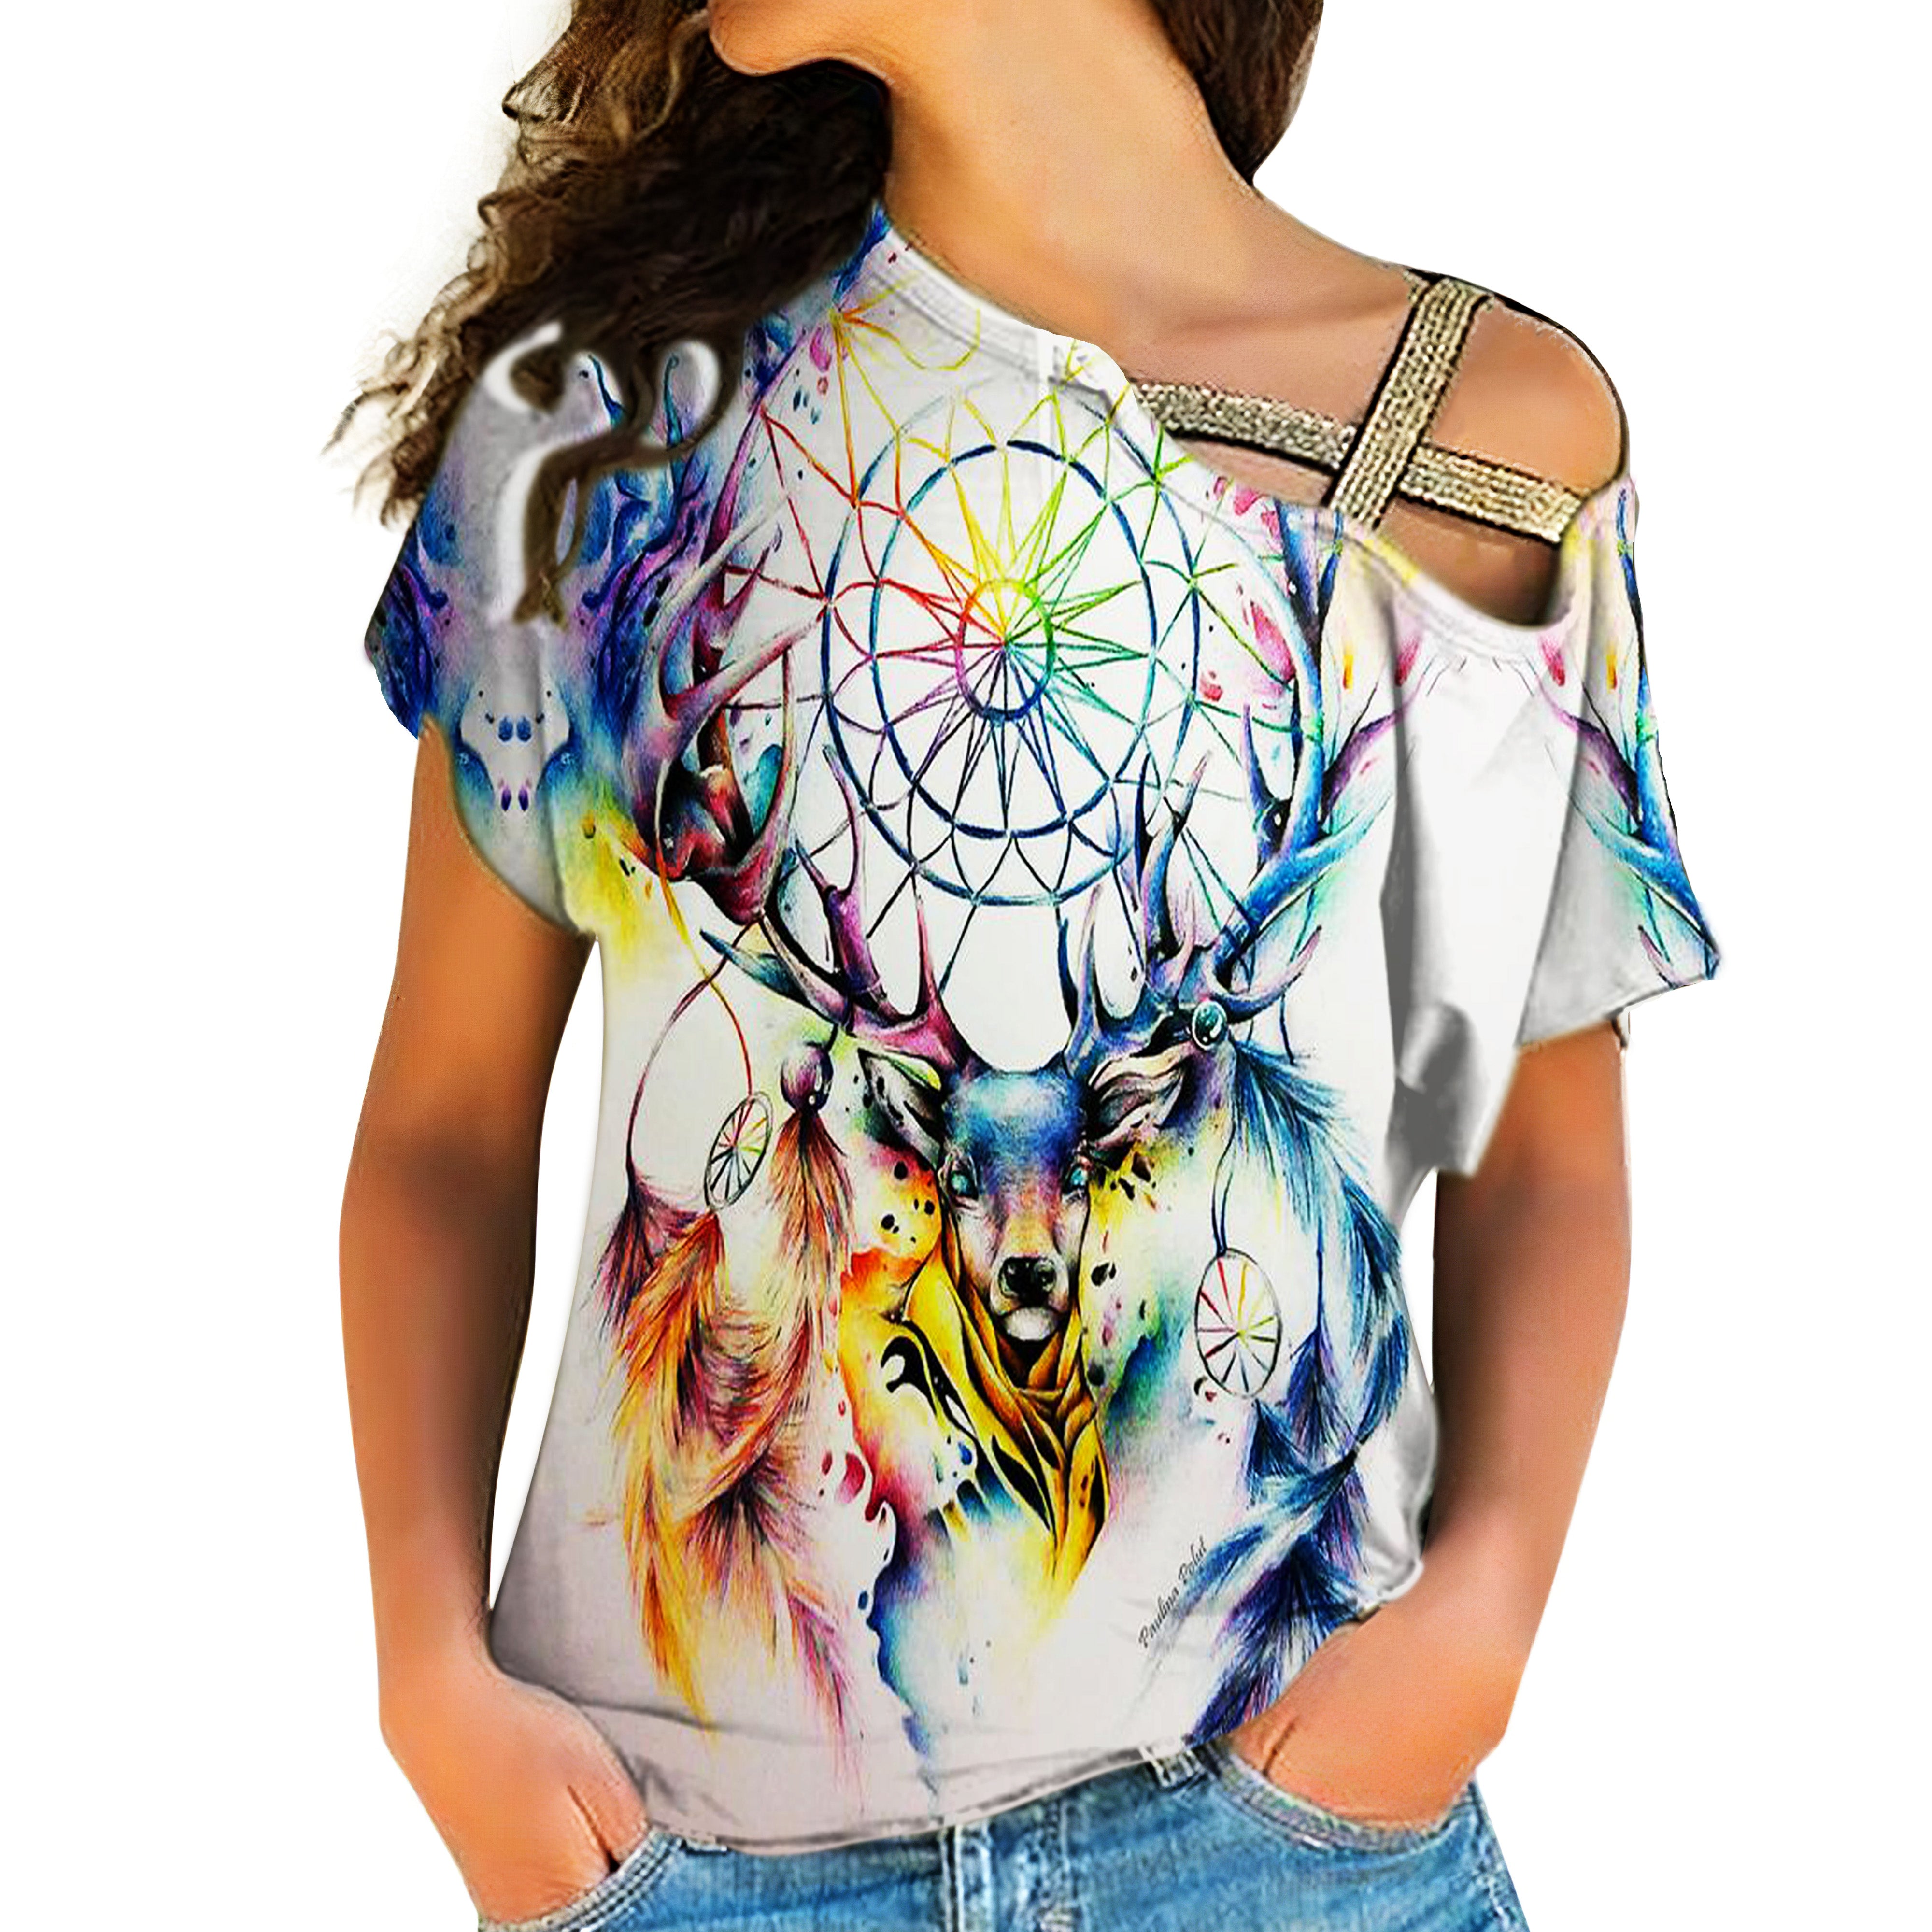 Powwow Store native american cross shoulder shirt 119